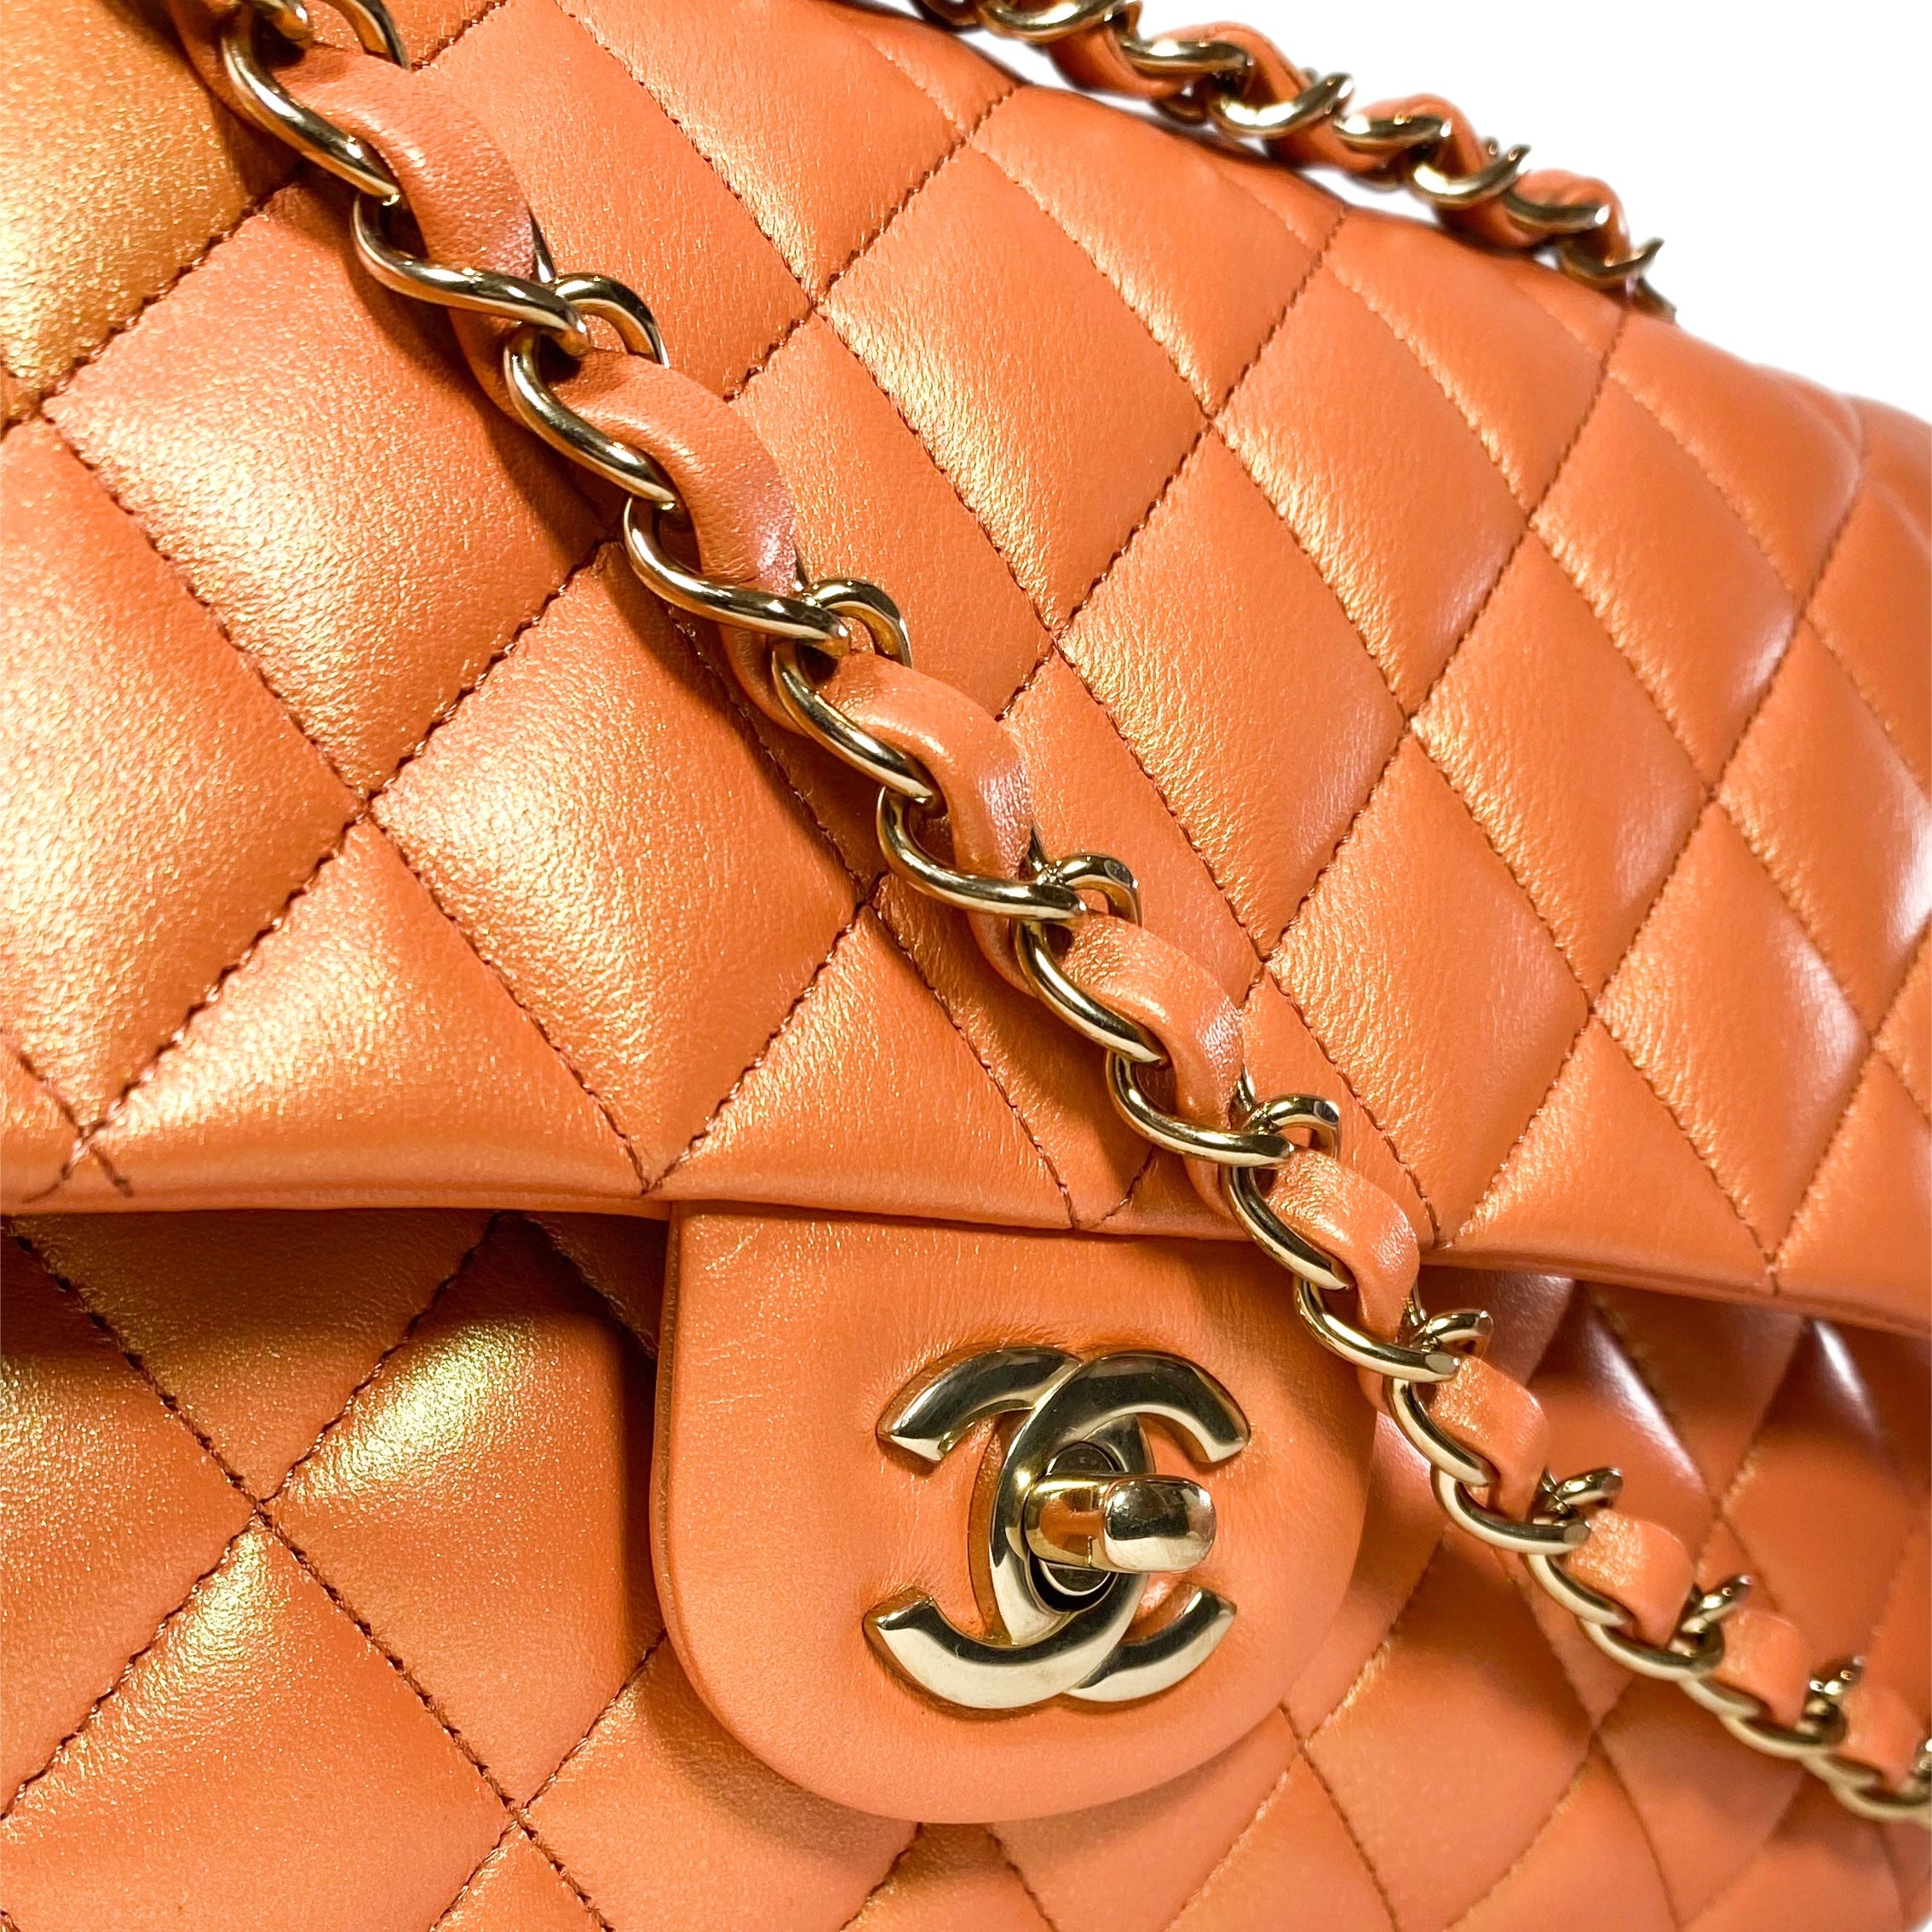 Chanel Orange Iridescent Medium Double Flap Bag